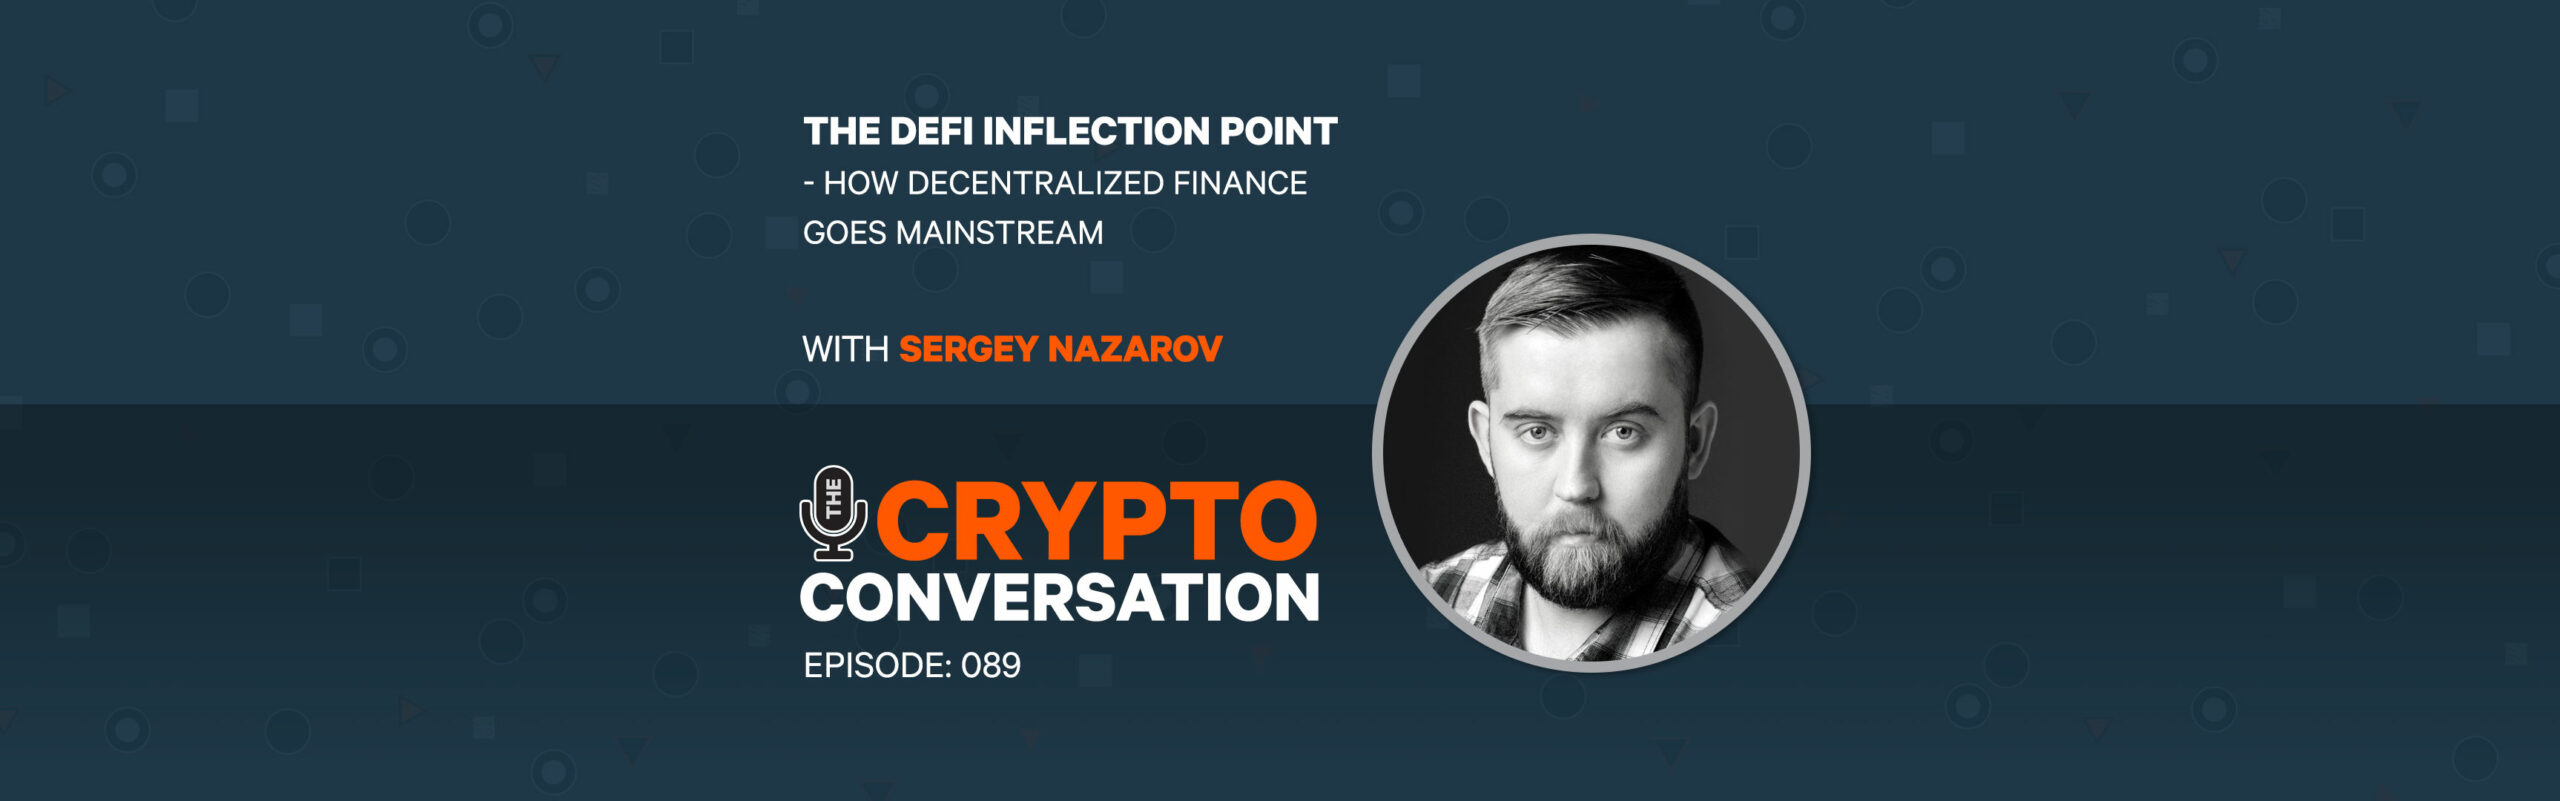 Chainlink’s Sergey Nazarov on how DeFi goes mainstream